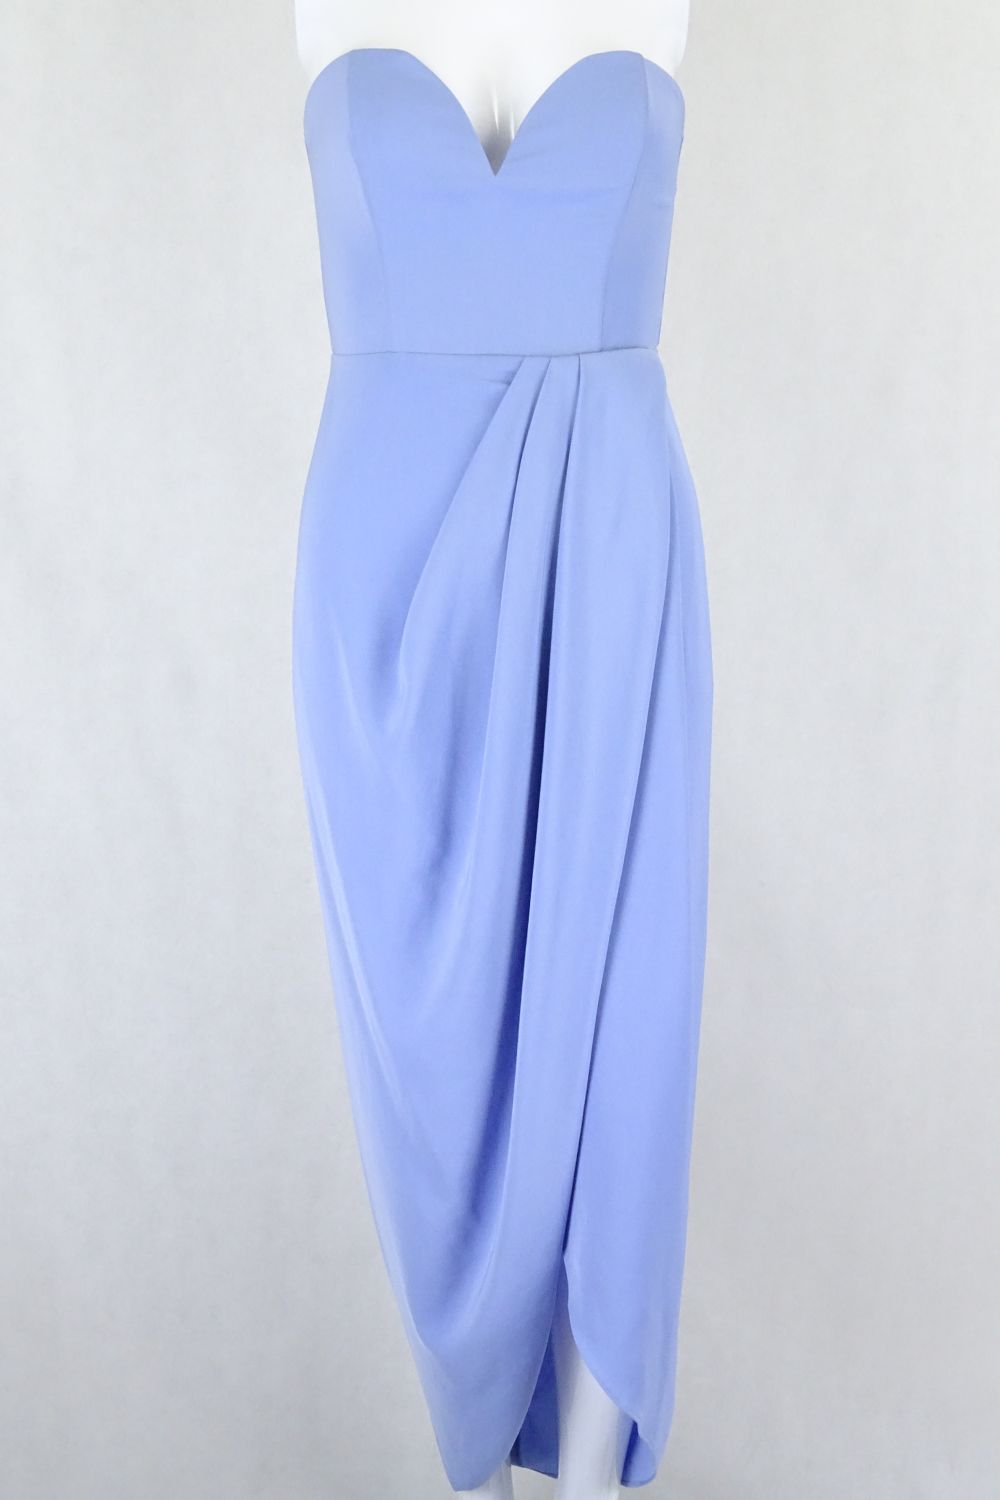 Blue Strapless Dress 6AU